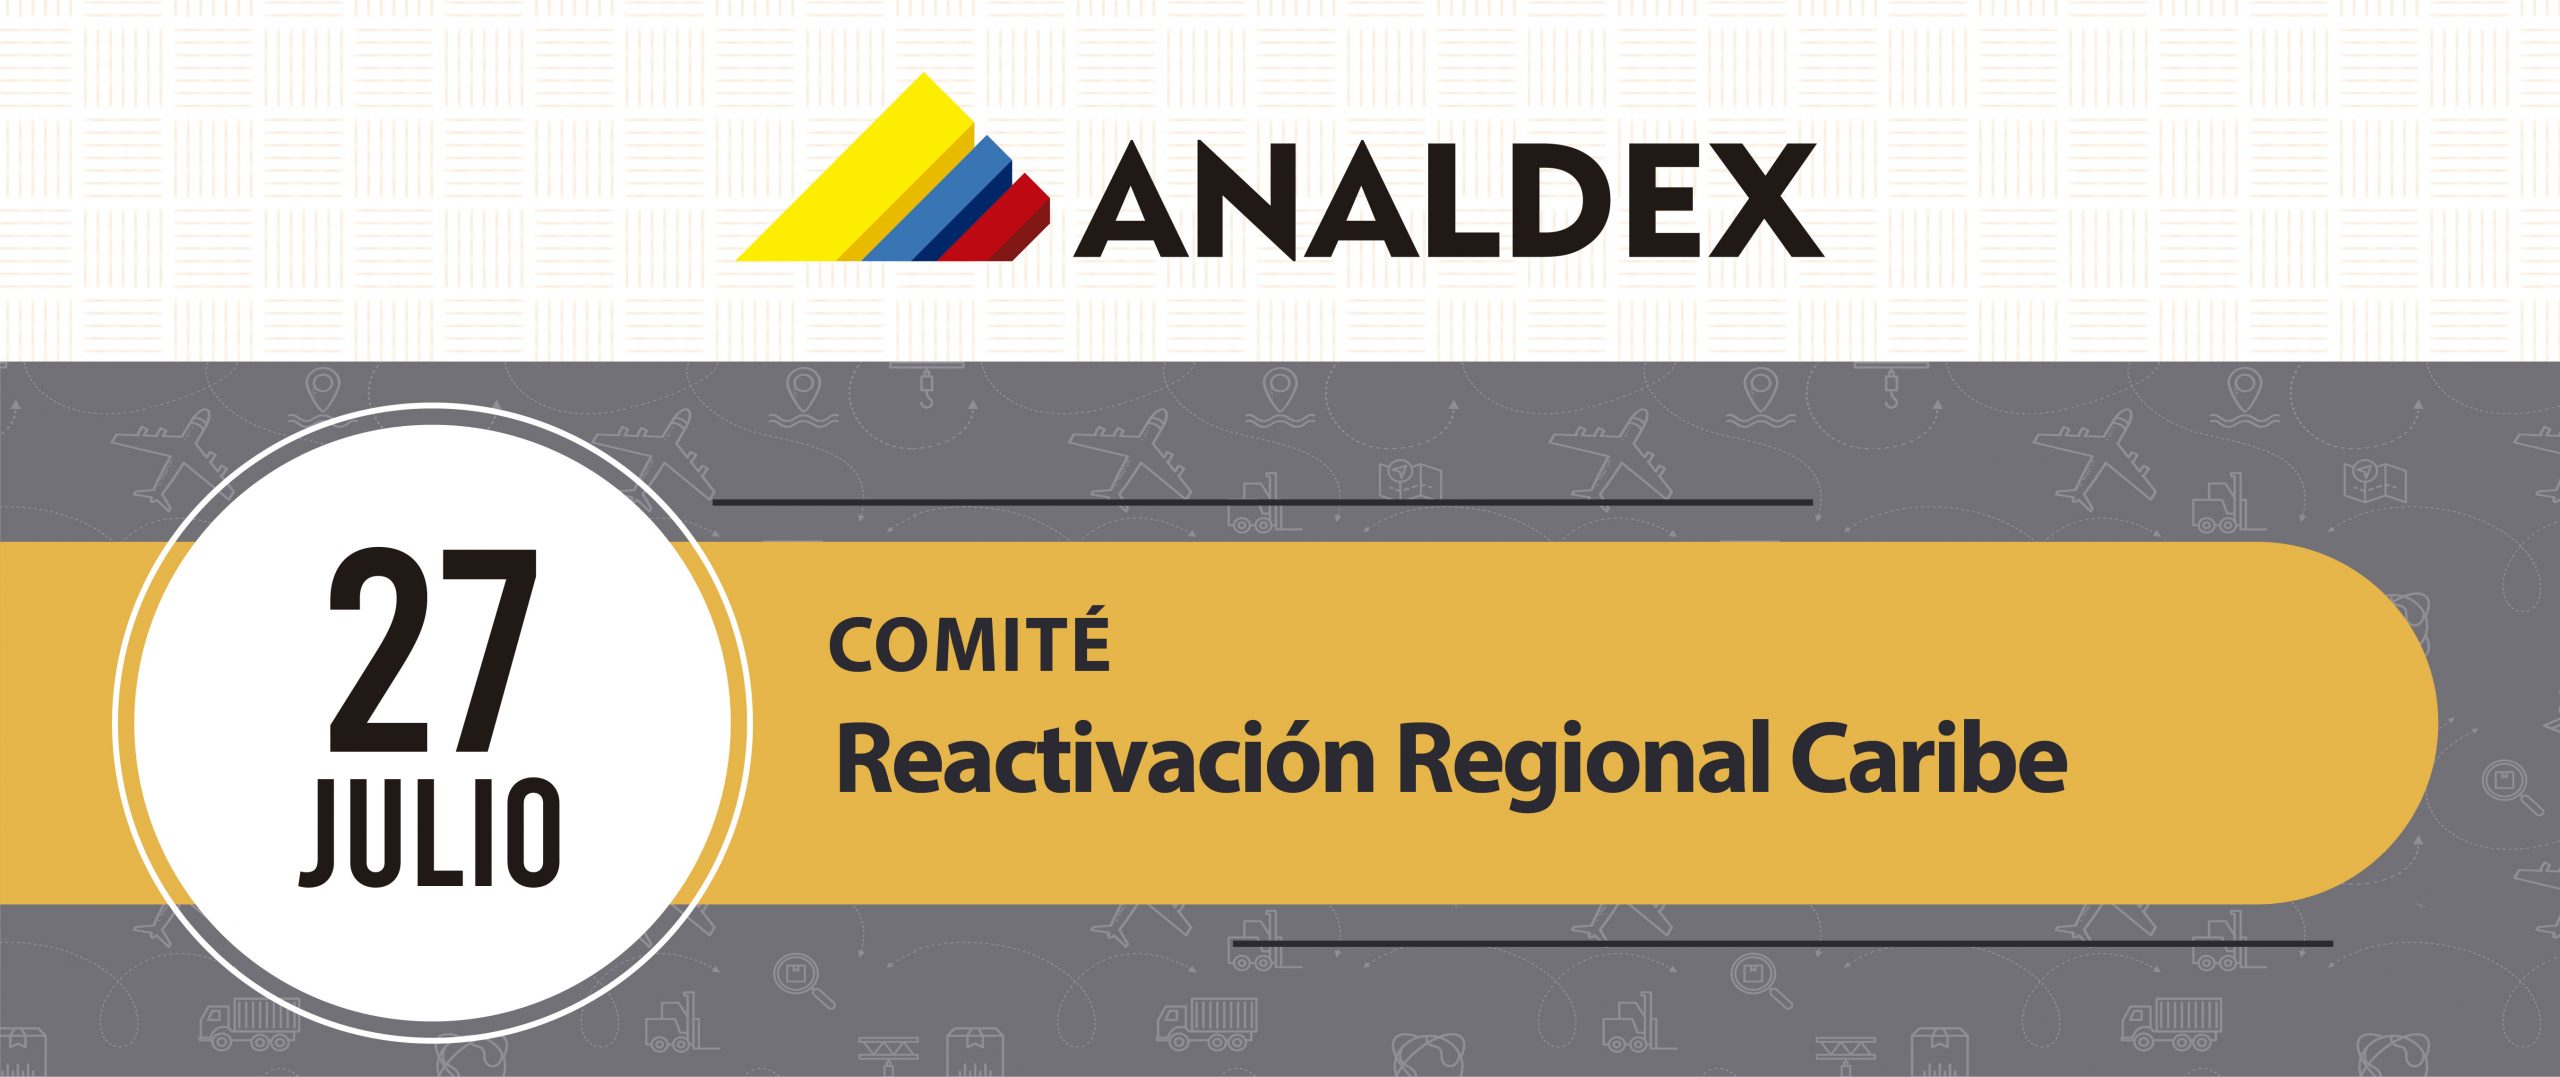 Comité: Reactivación Regional Caribe